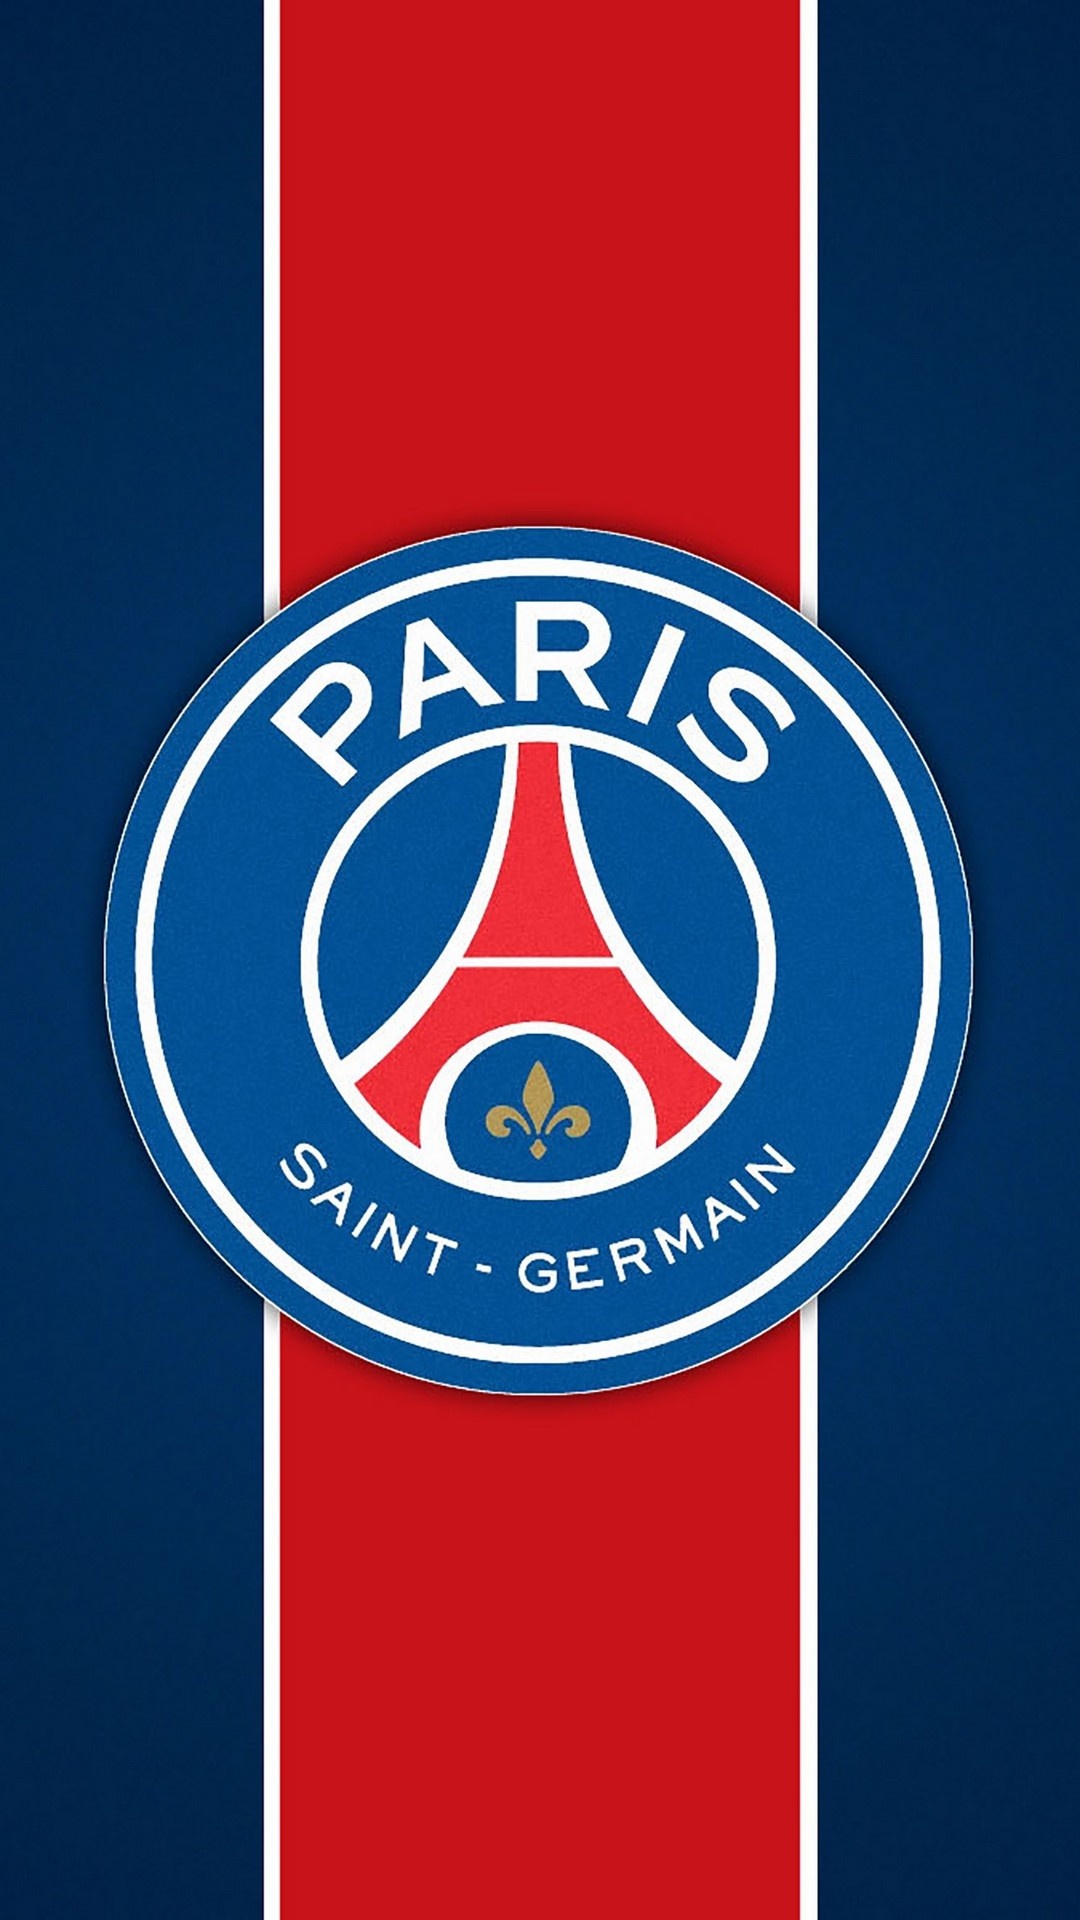 Paris Saint-Germain: Owned by Qatar Sports Investments. 1080x1920 Full HD Wallpaper.